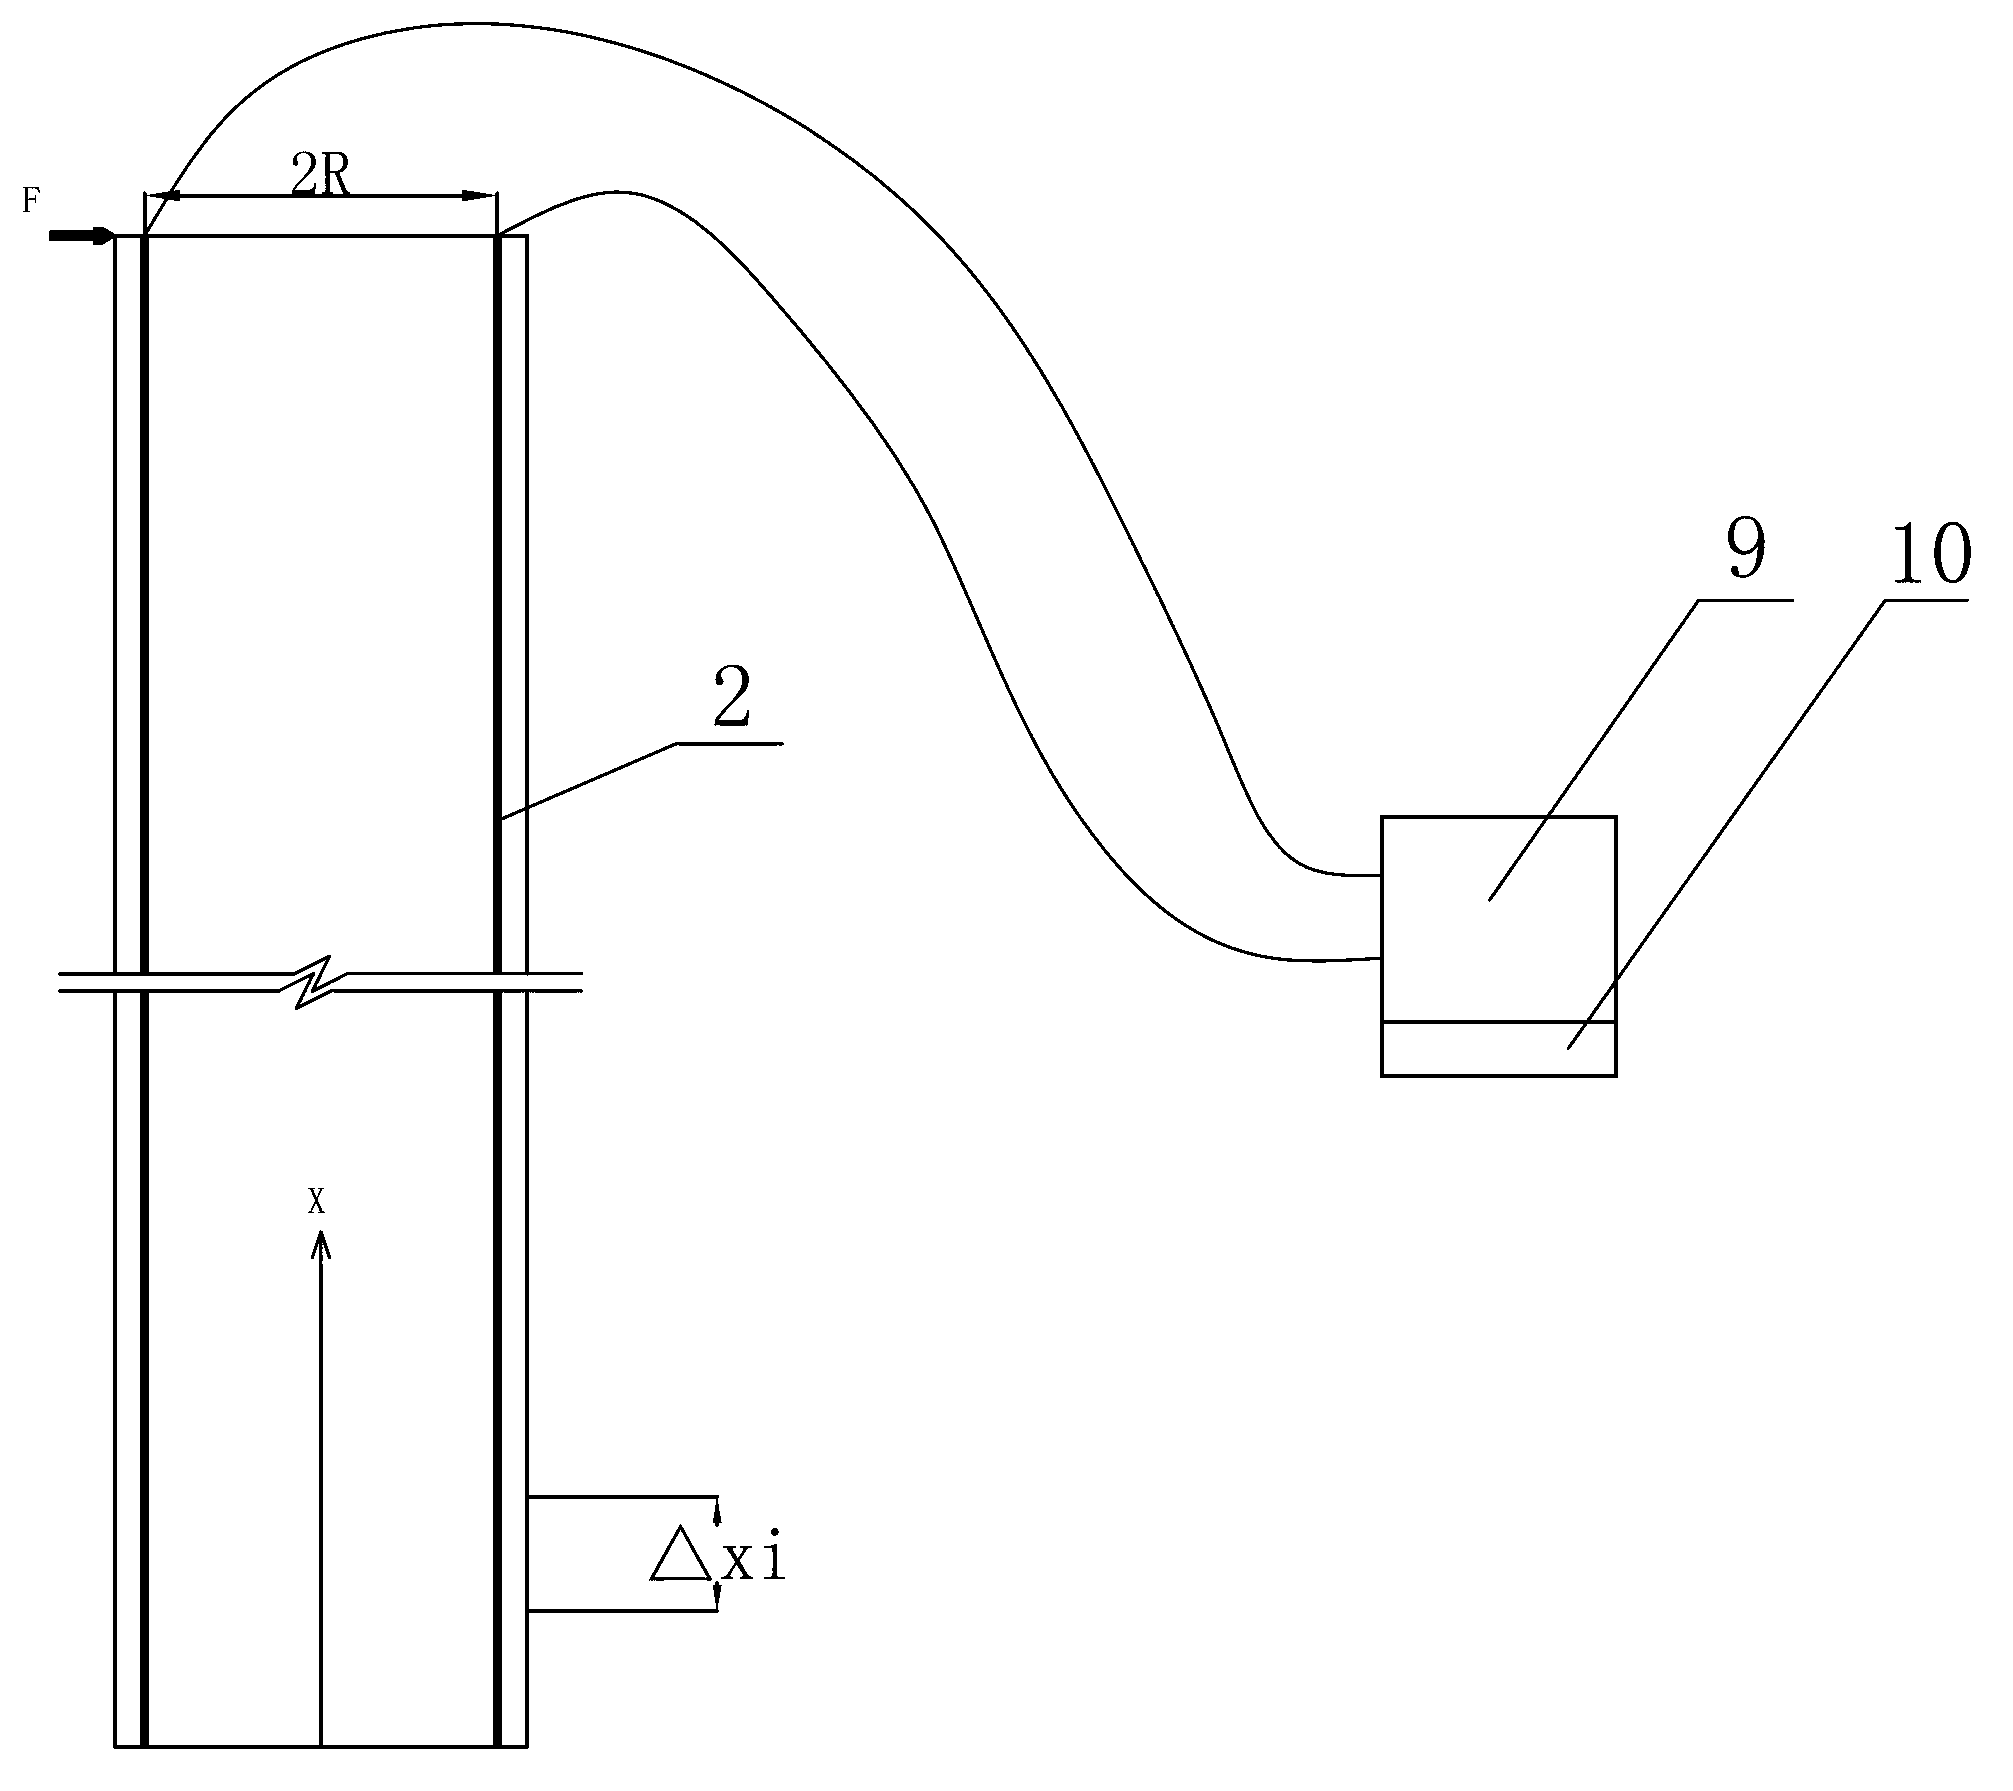 Foundation pile deflection measurement method based on distributed fiber sensing technique